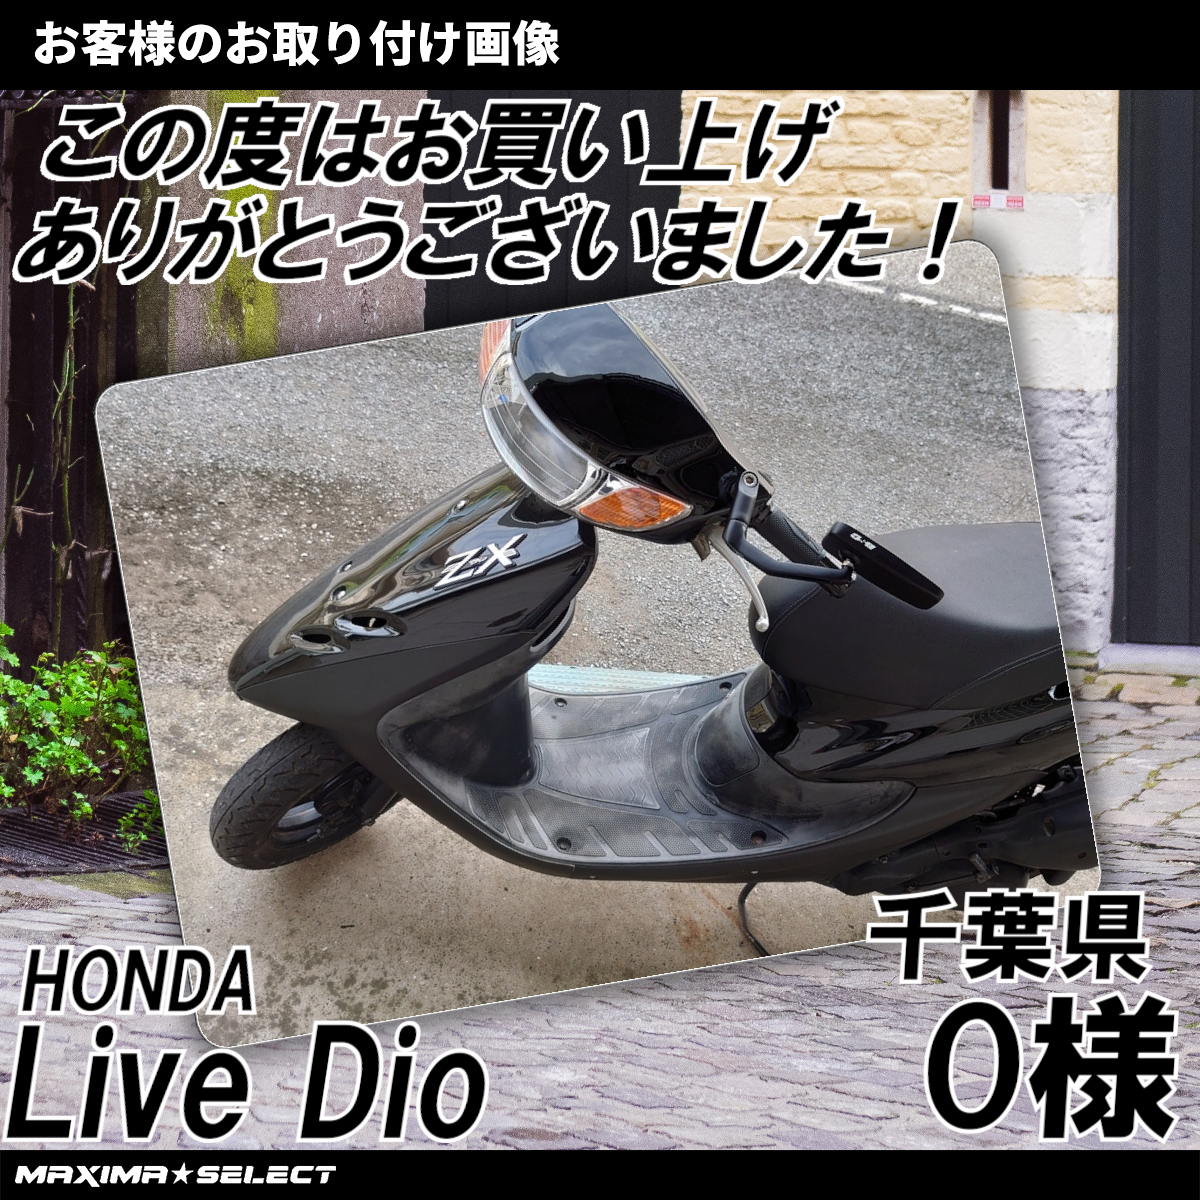 HONDA Live Dio ZX ライブ ディオ パーツリスト14版 - カタログ